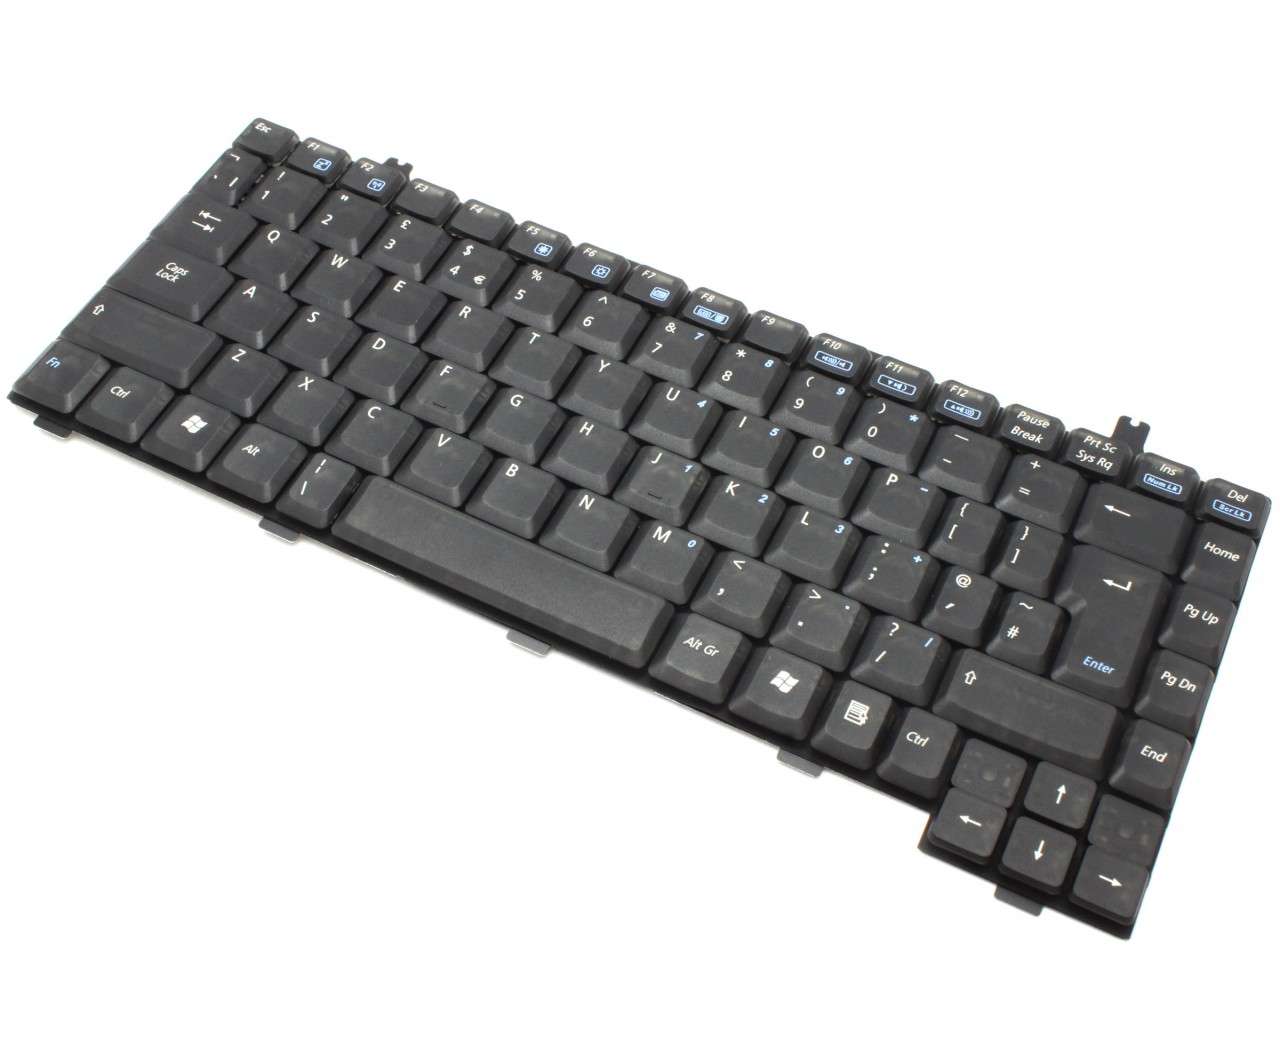 Tastatura Asus L2000E